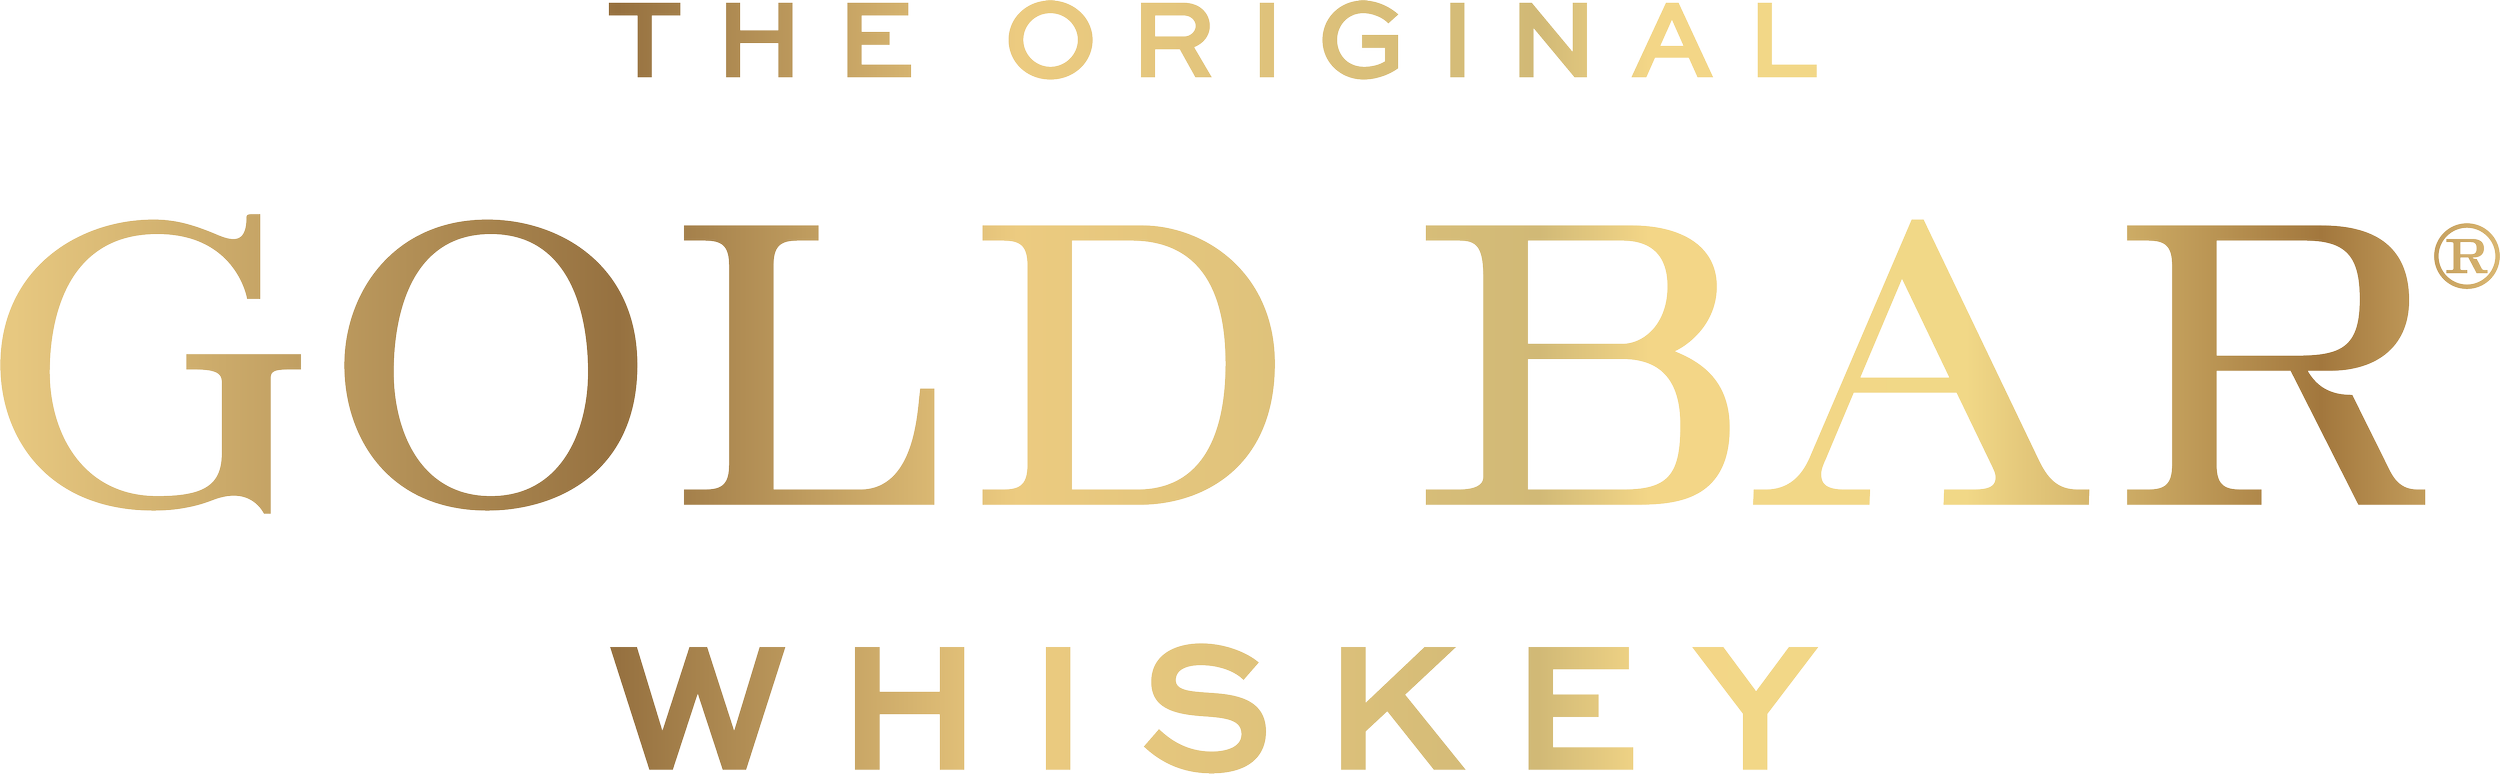 GBW Logo - Gold - xl whiskey (1) (1) - Sam Thumm.png